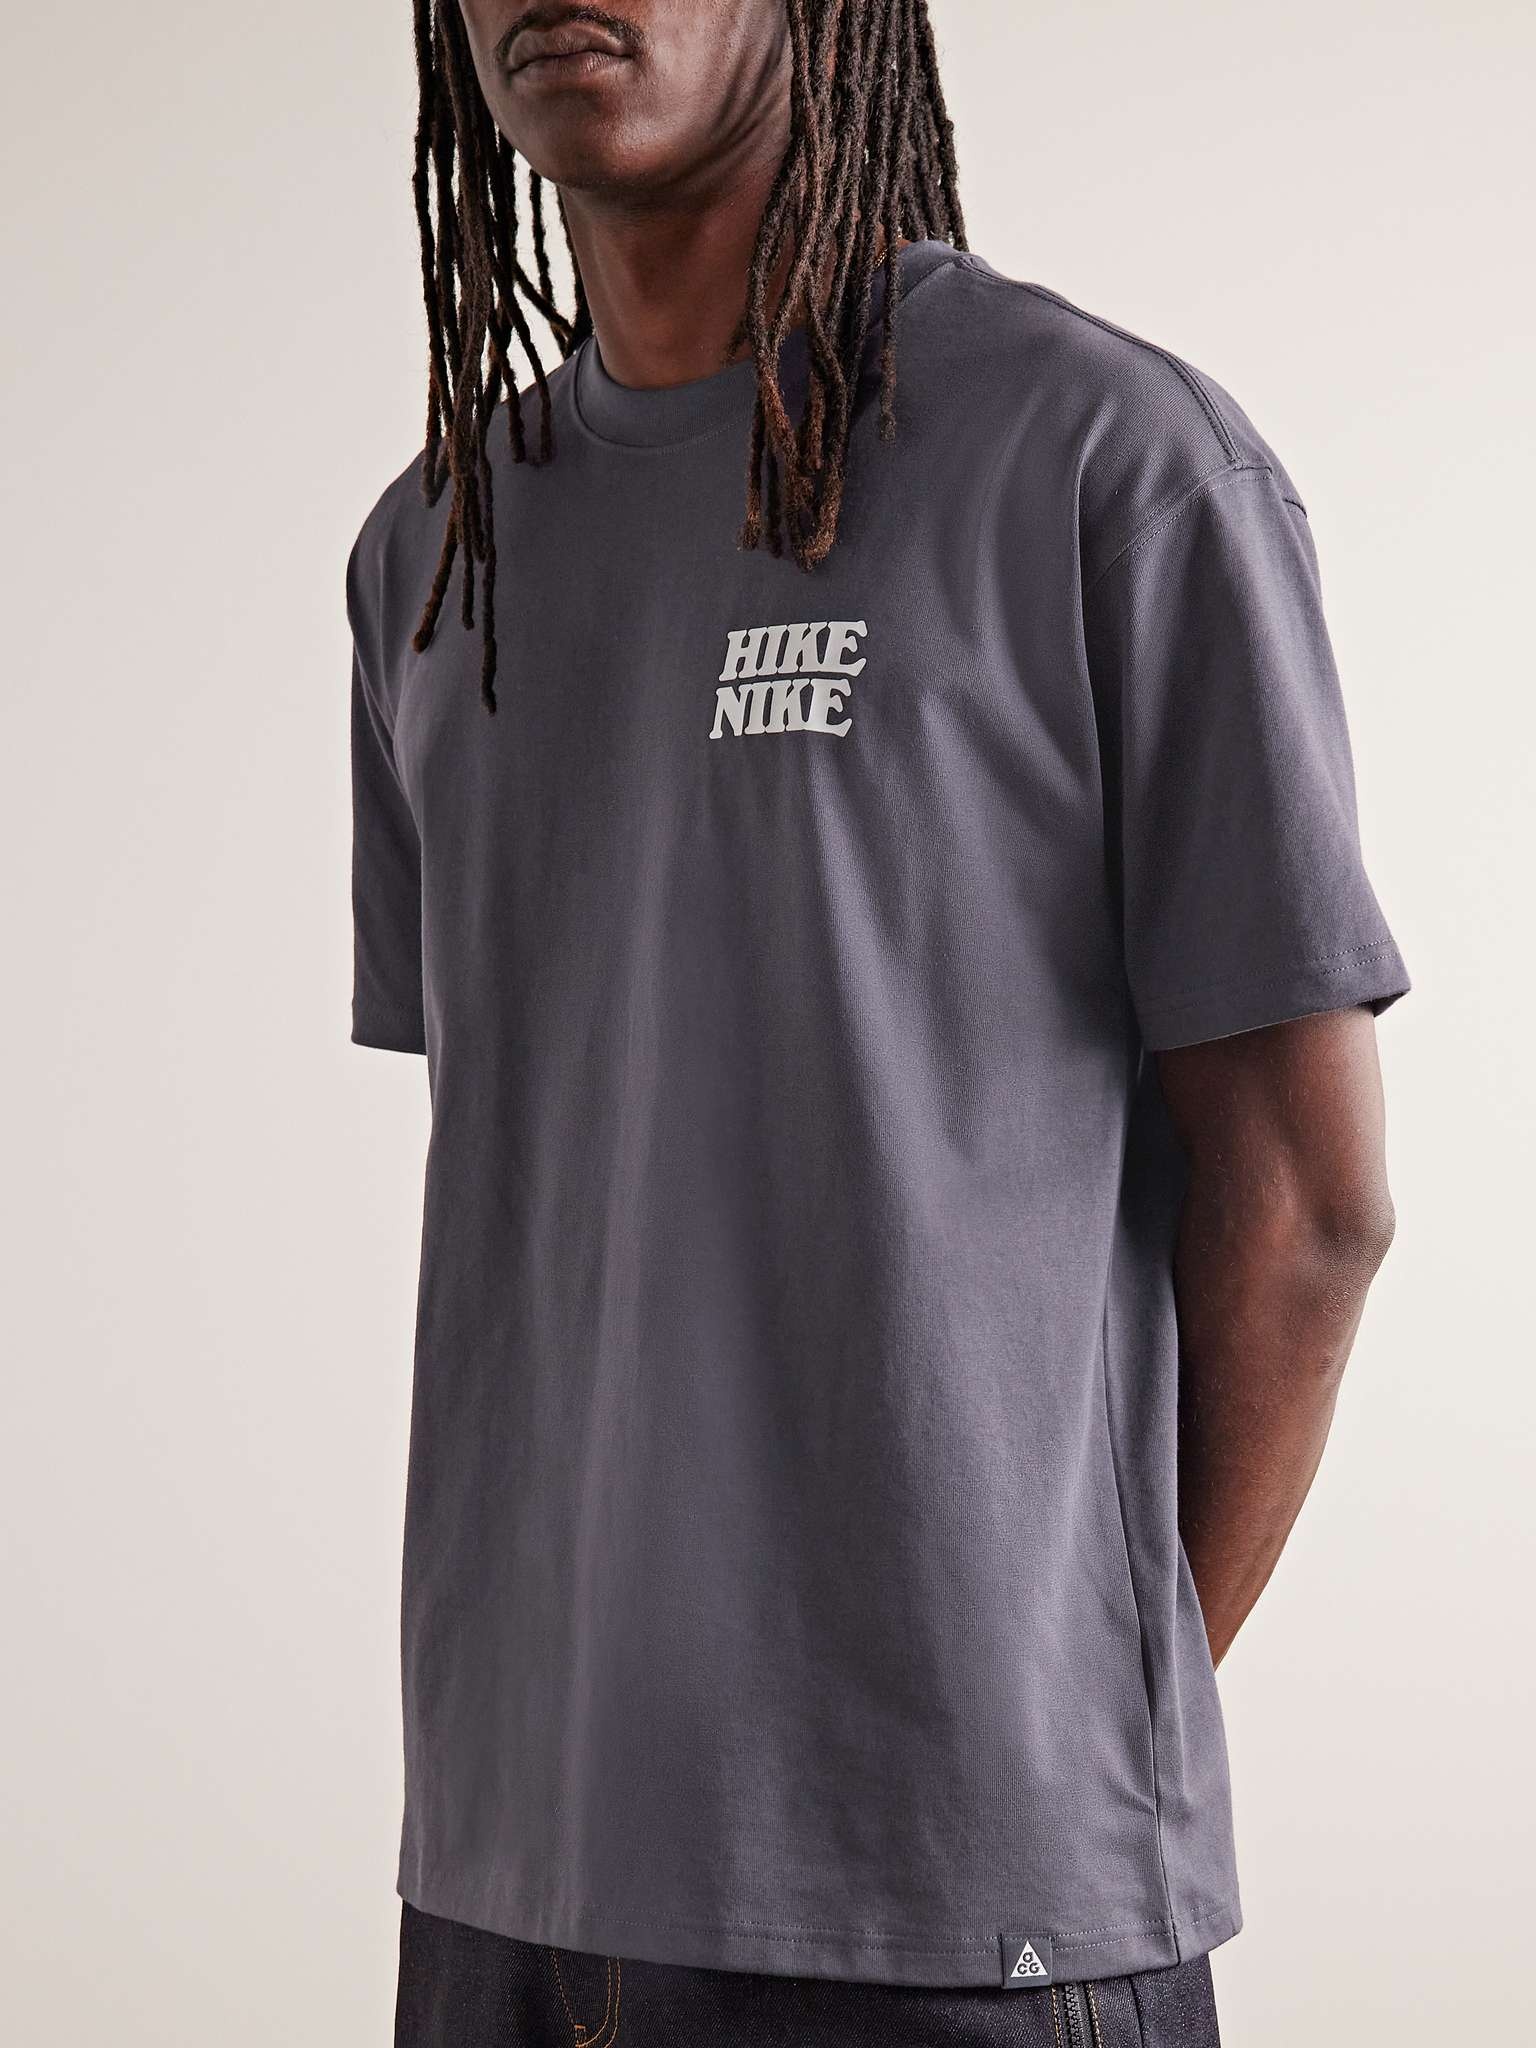 ACG NRG Printed Jersey T-Shirt - 3